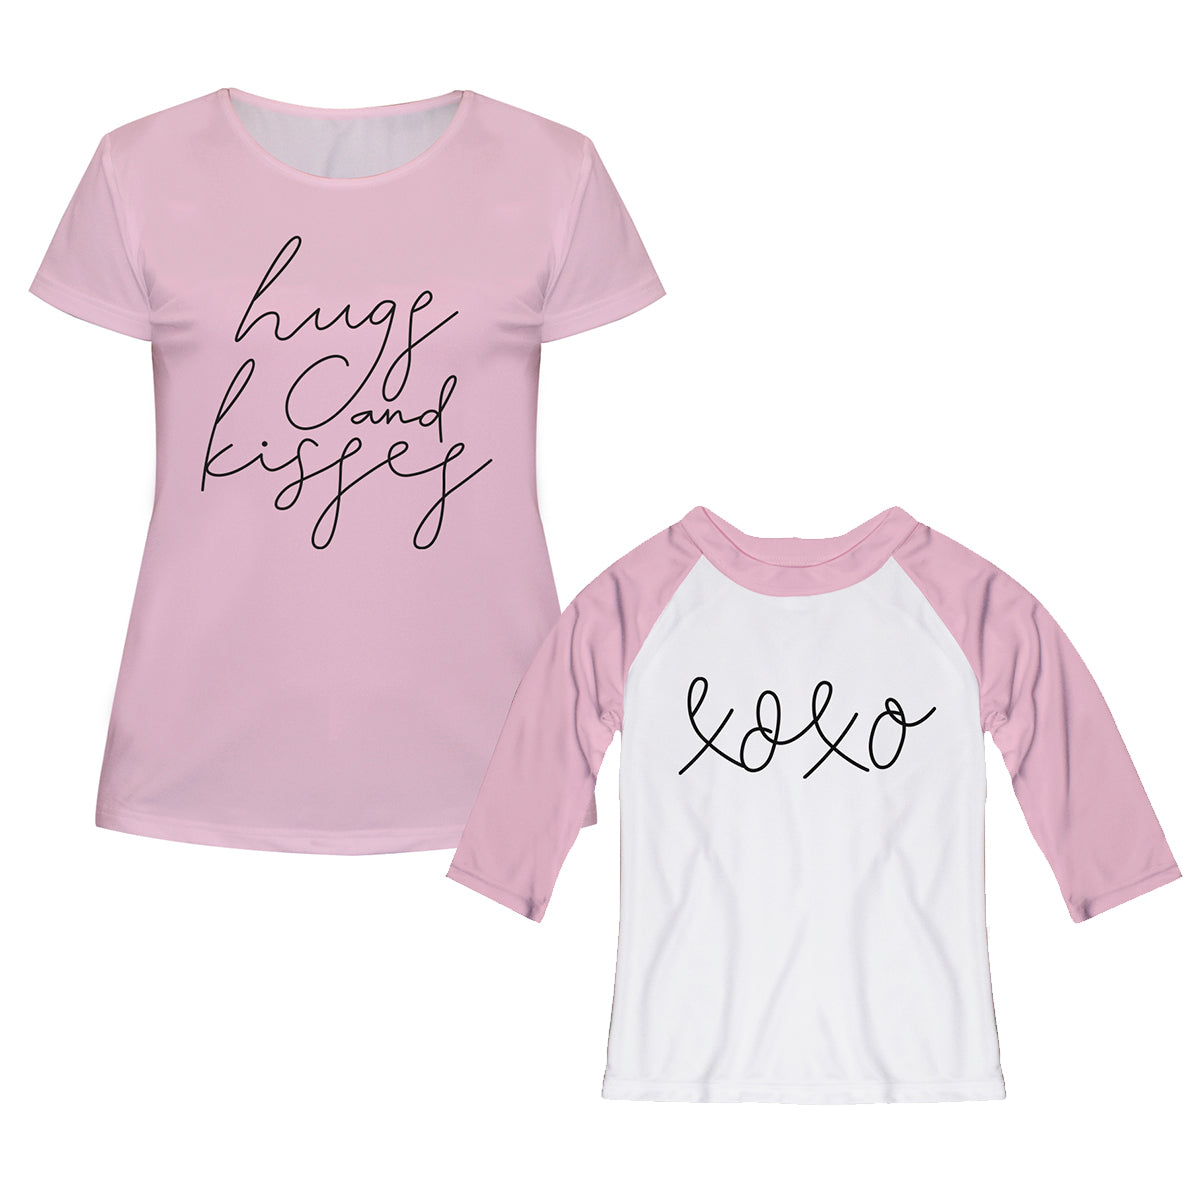 XOXO White and Pink Raglan Tee Shirt 3/4 Sleeve - Wimziy&Co.